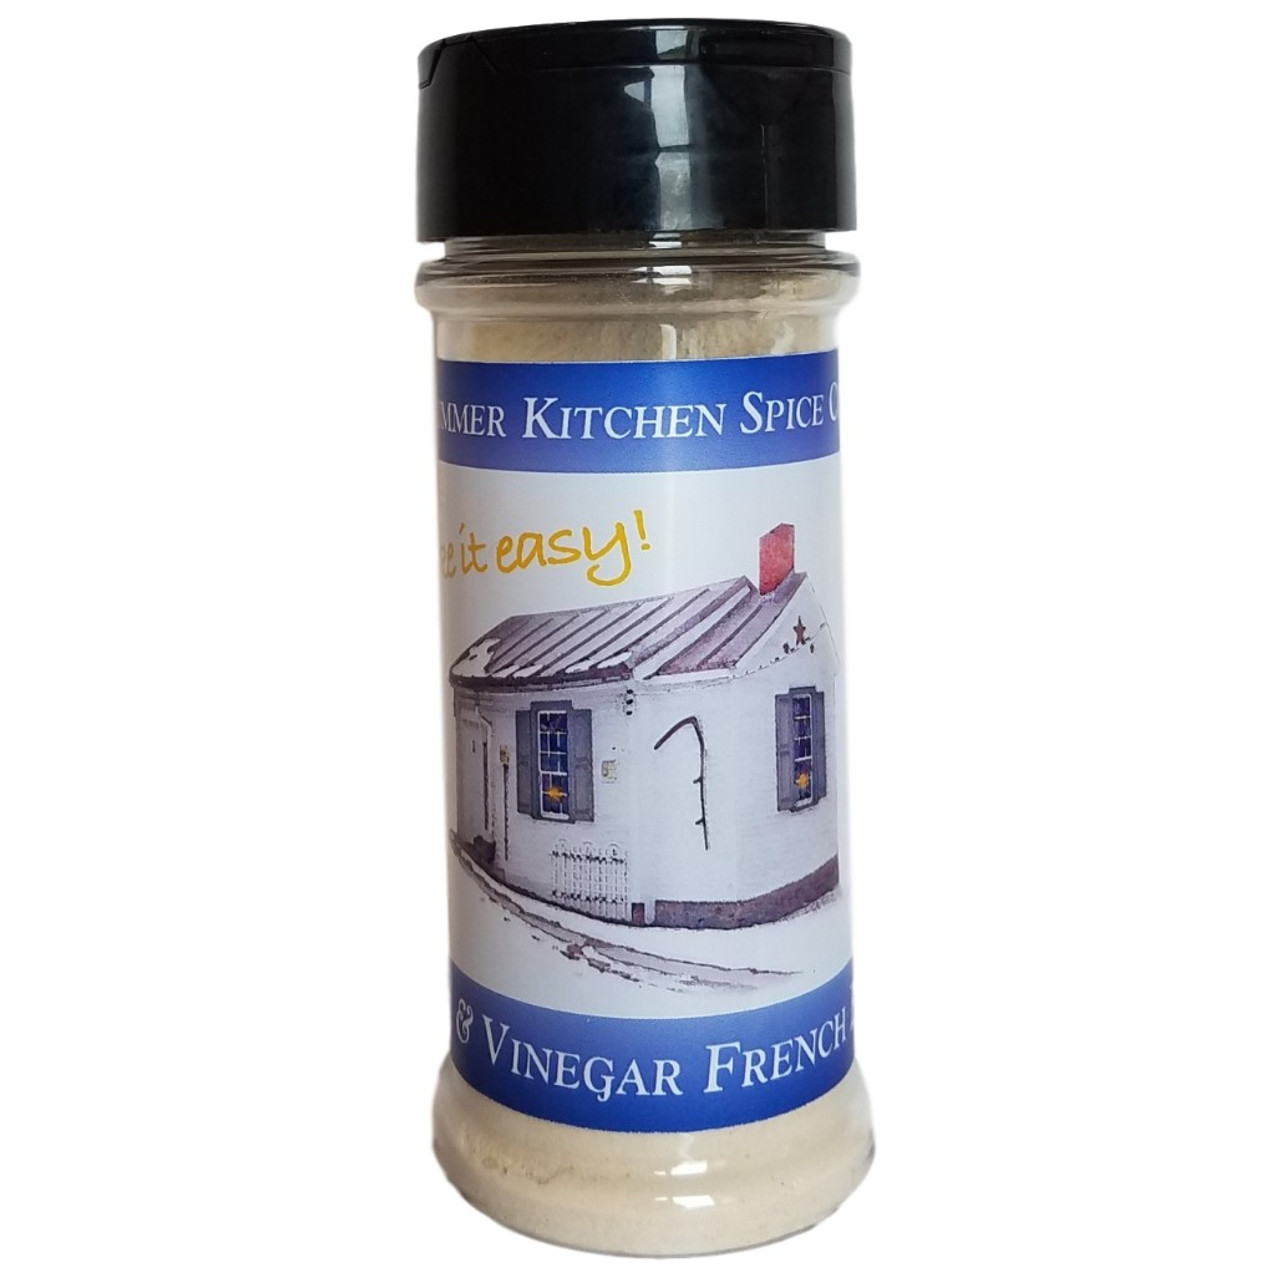 https://cdn11.bigcommerce.com/s-x8y6yj0di0/images/stencil/1280x1280/products/249/554/Summer_Kitchen_Spice_Salt_Vinegar_French_Fry_Seasoning__07484.1604089233.jpg?c=1